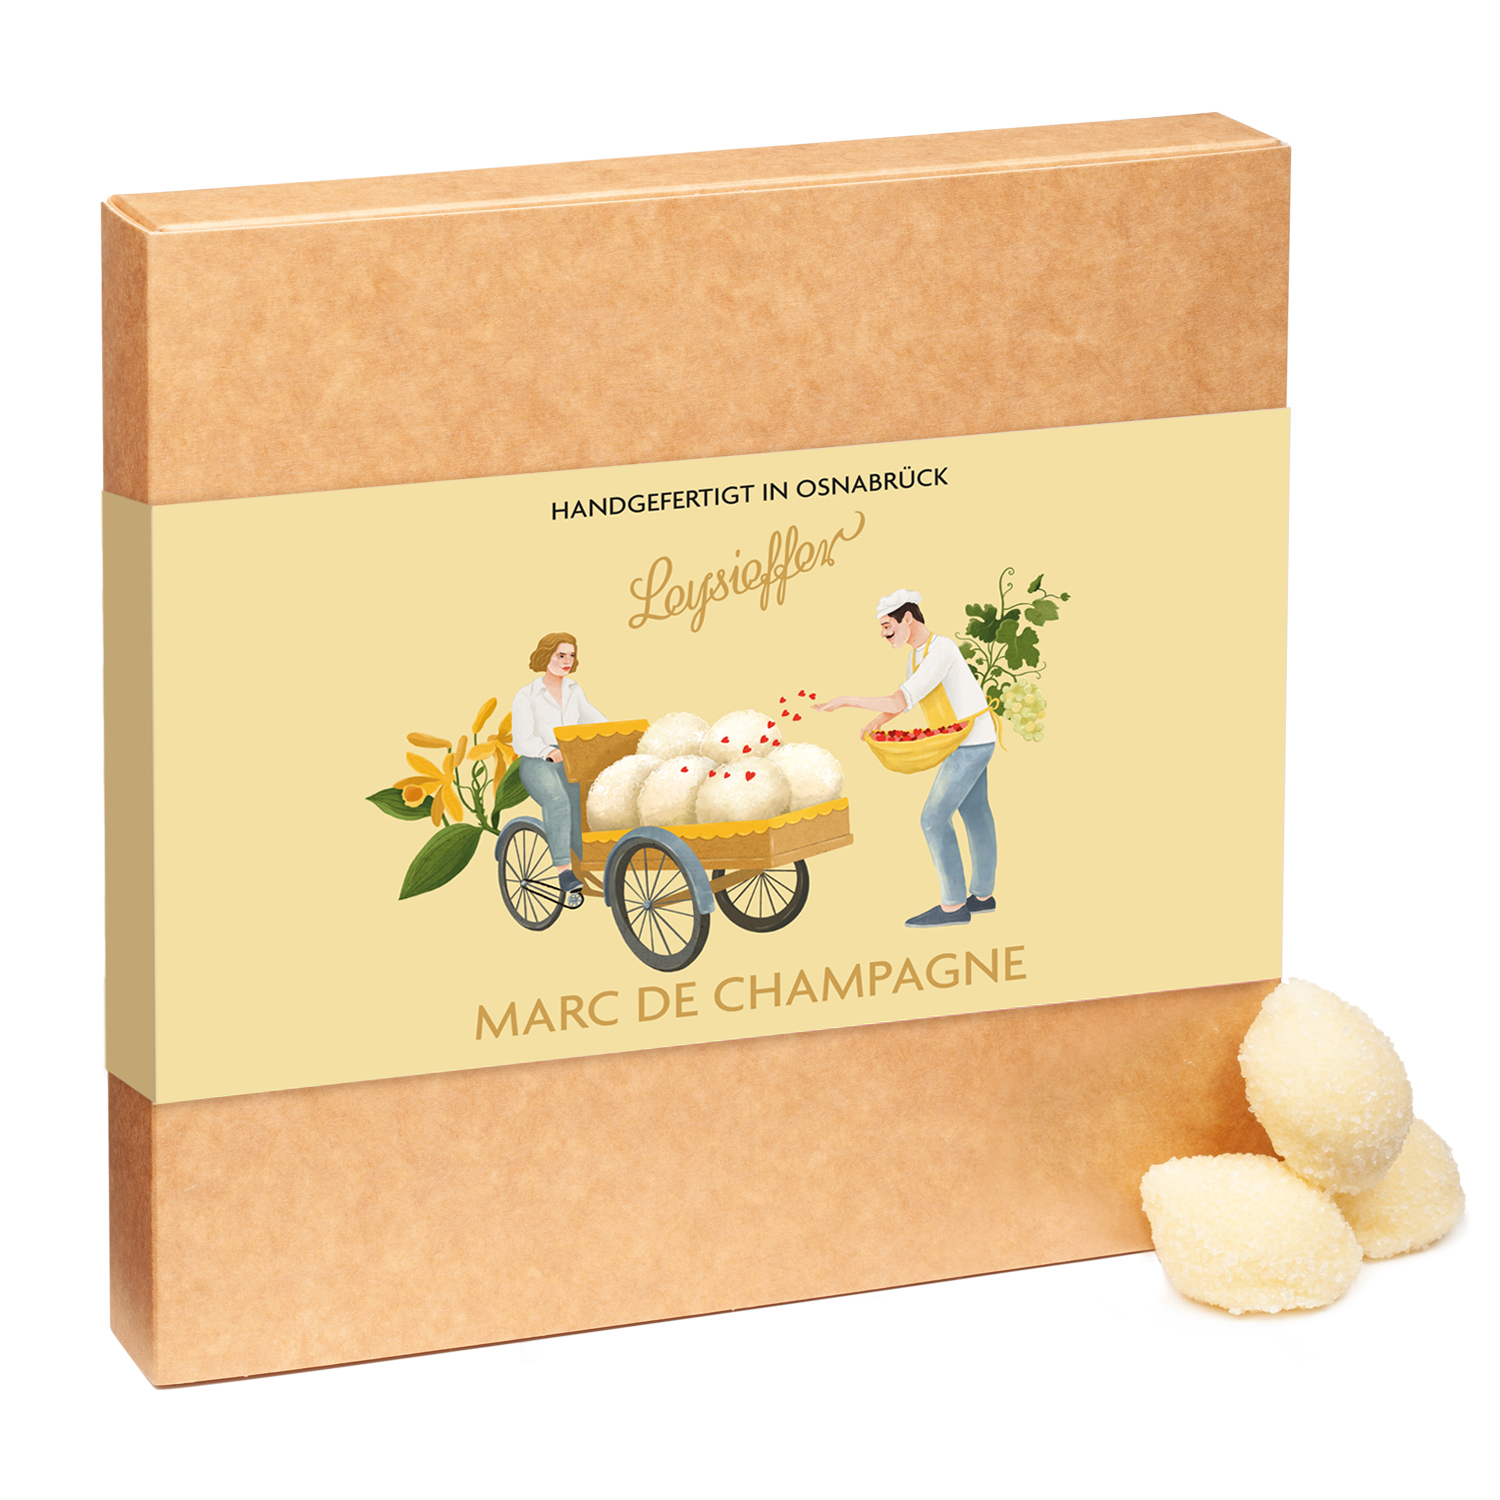 White Cream Truffles with Marc de Champagne in a Gift Box